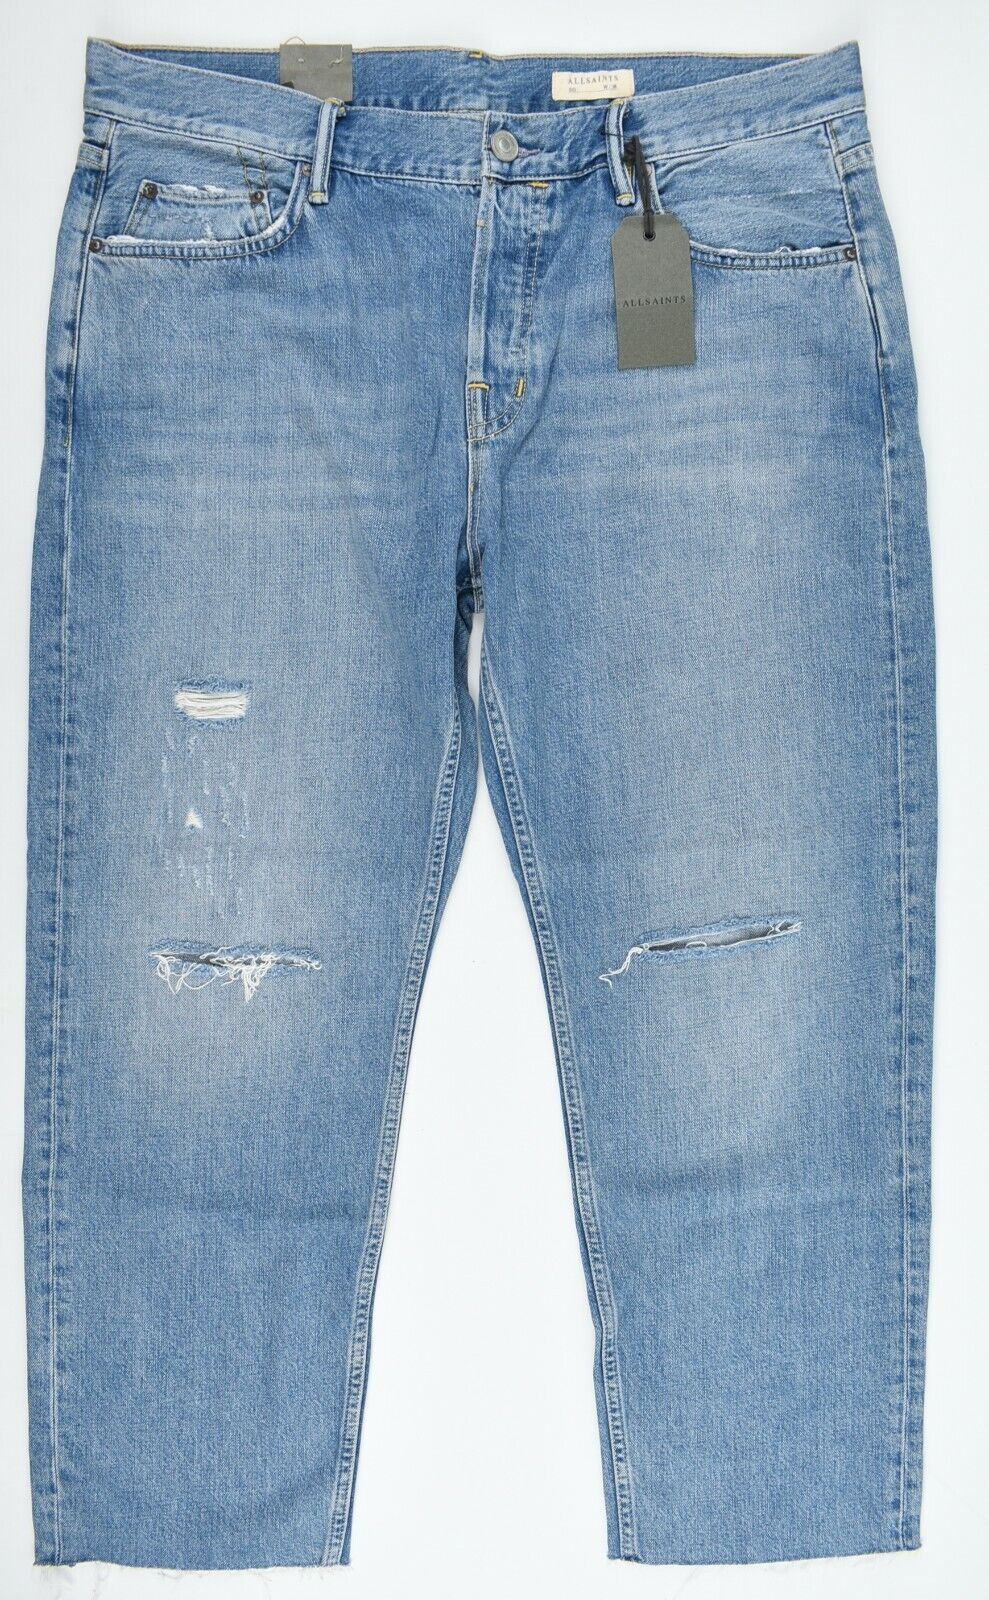 ALL SAINTS Men's SID Straight Crop Jeans, Blue, Distressed, size W36